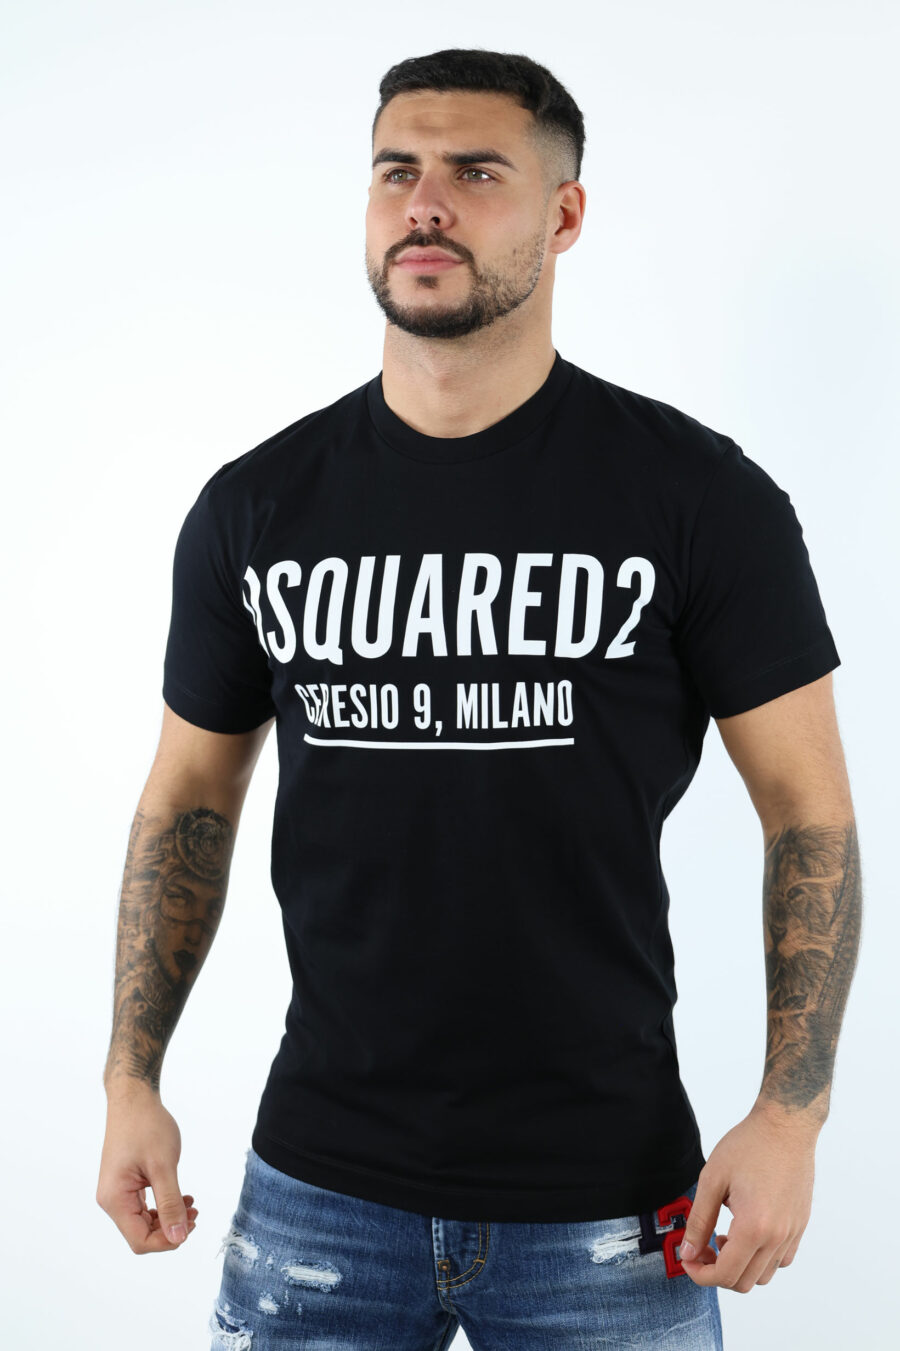 T-shirt preta com maxilogo "ceresio 9 milano" - 106862